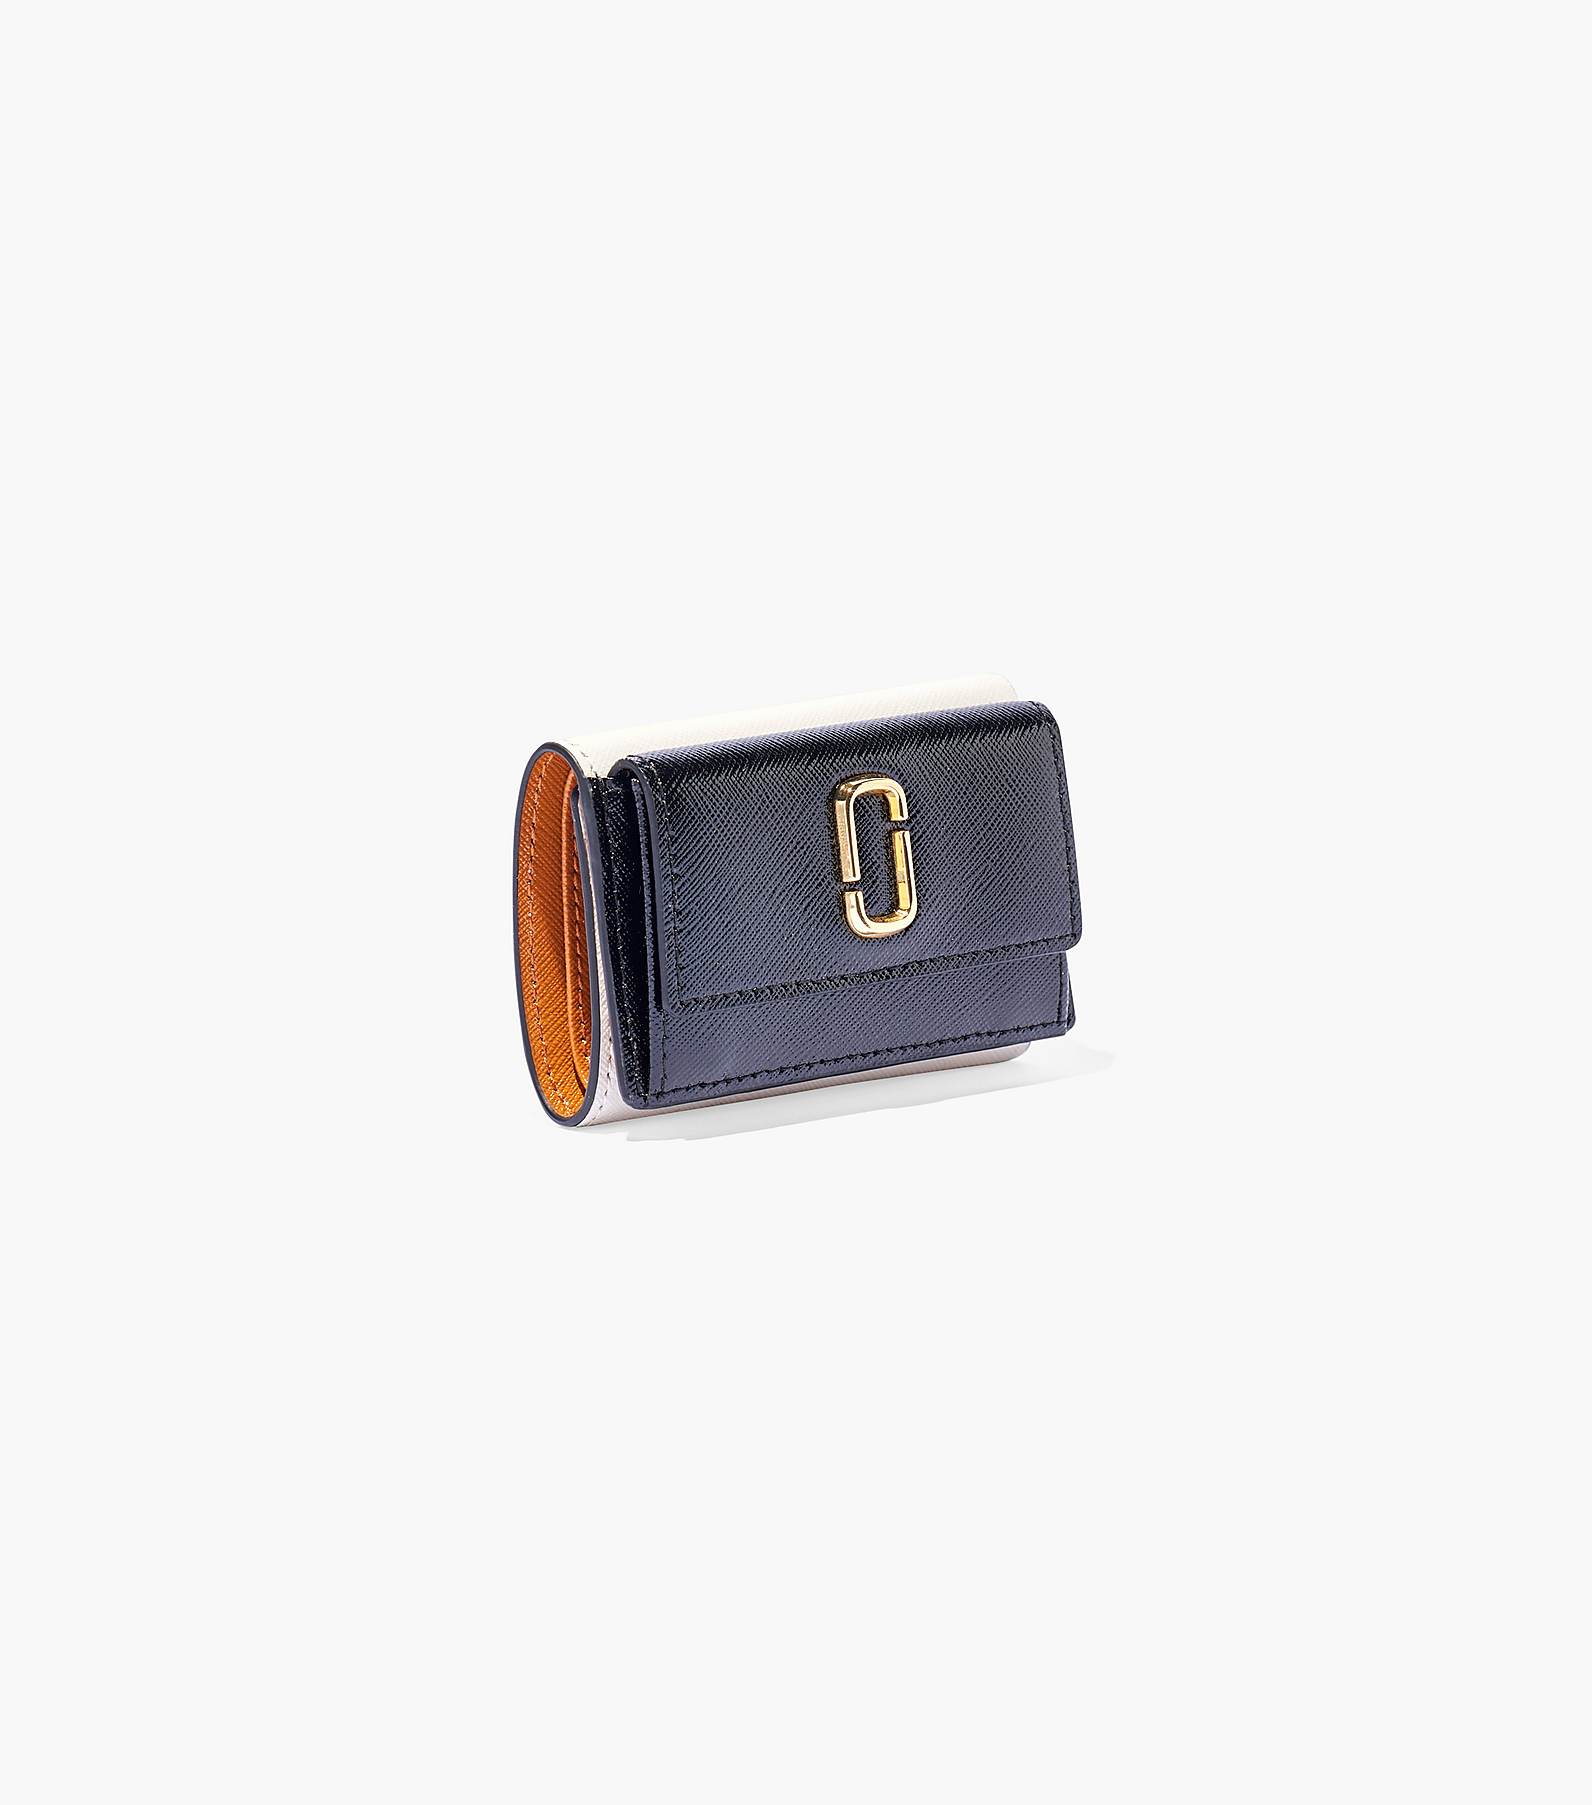 The Snapshot Mini Trifold Wallet